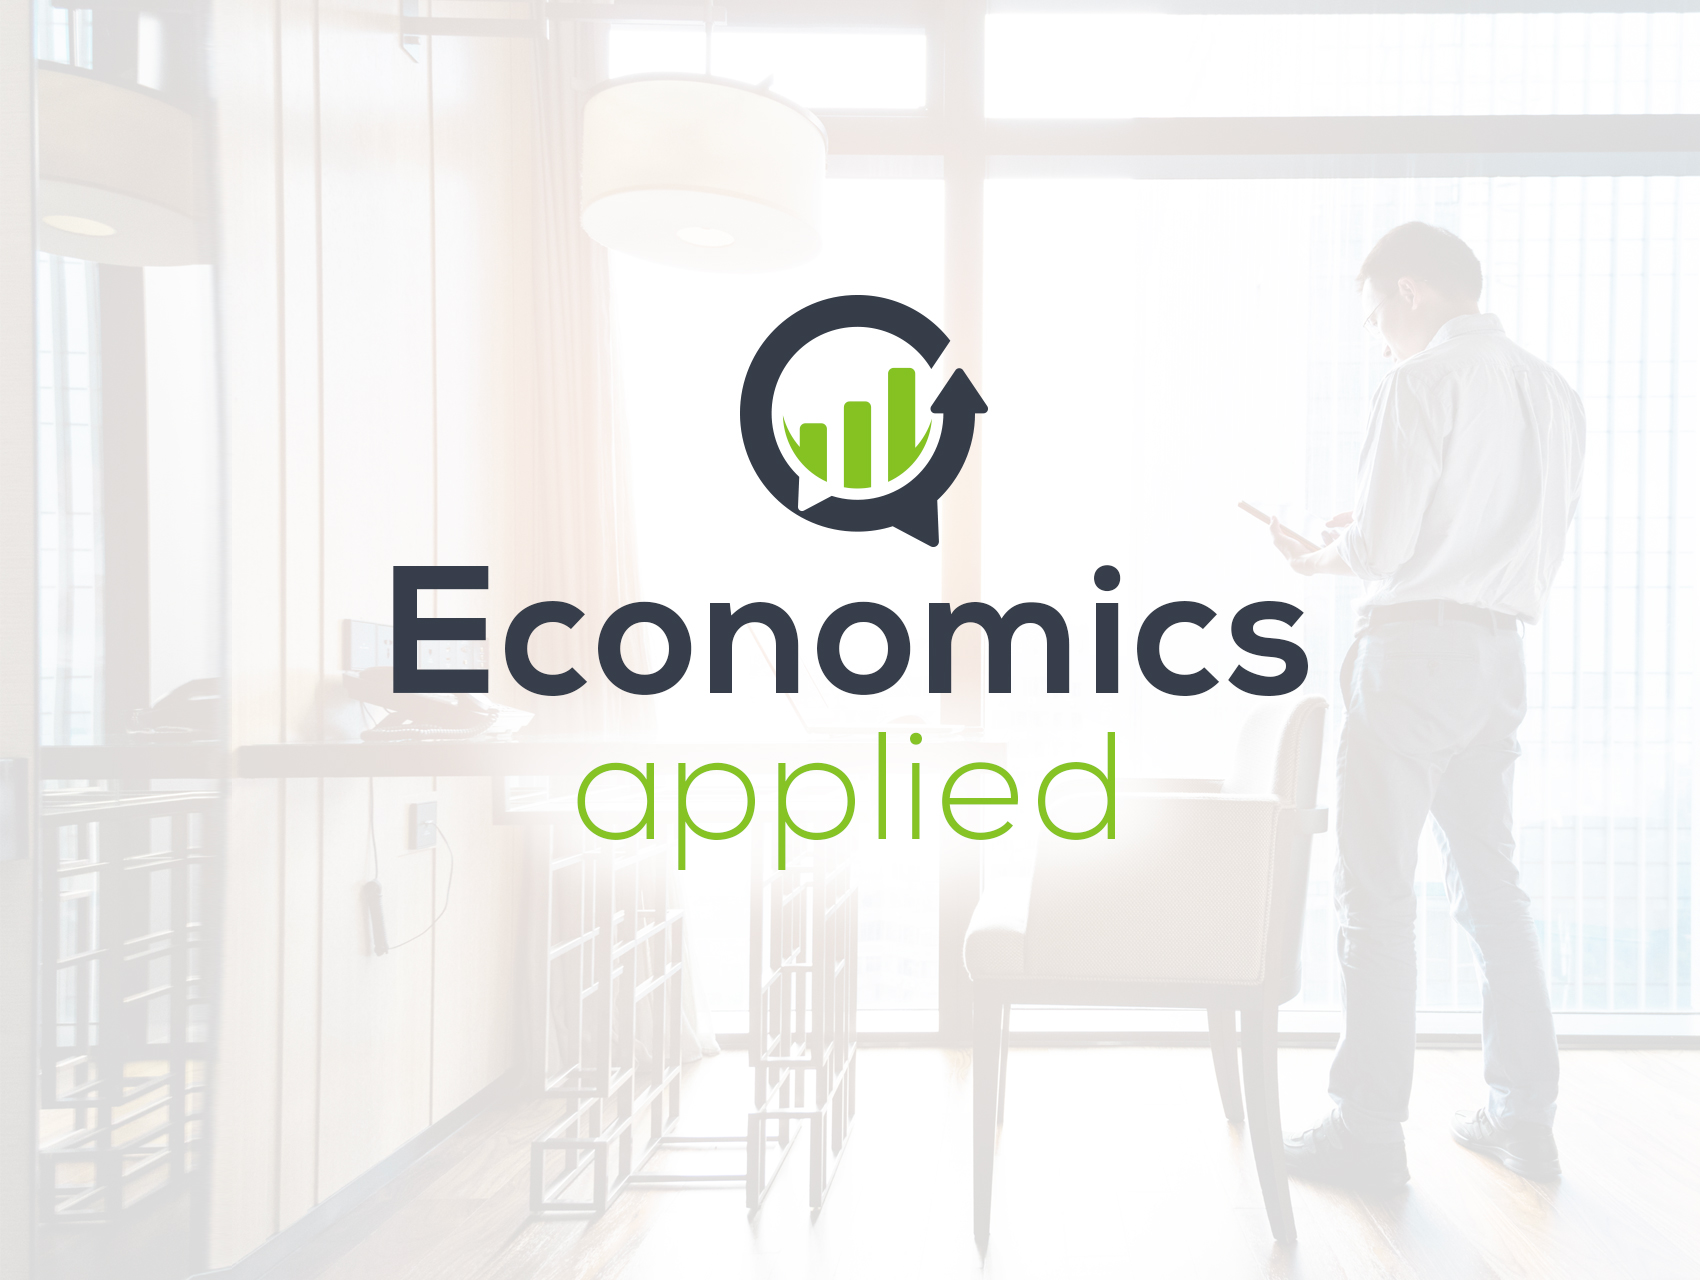 Economics-Applied_12-11